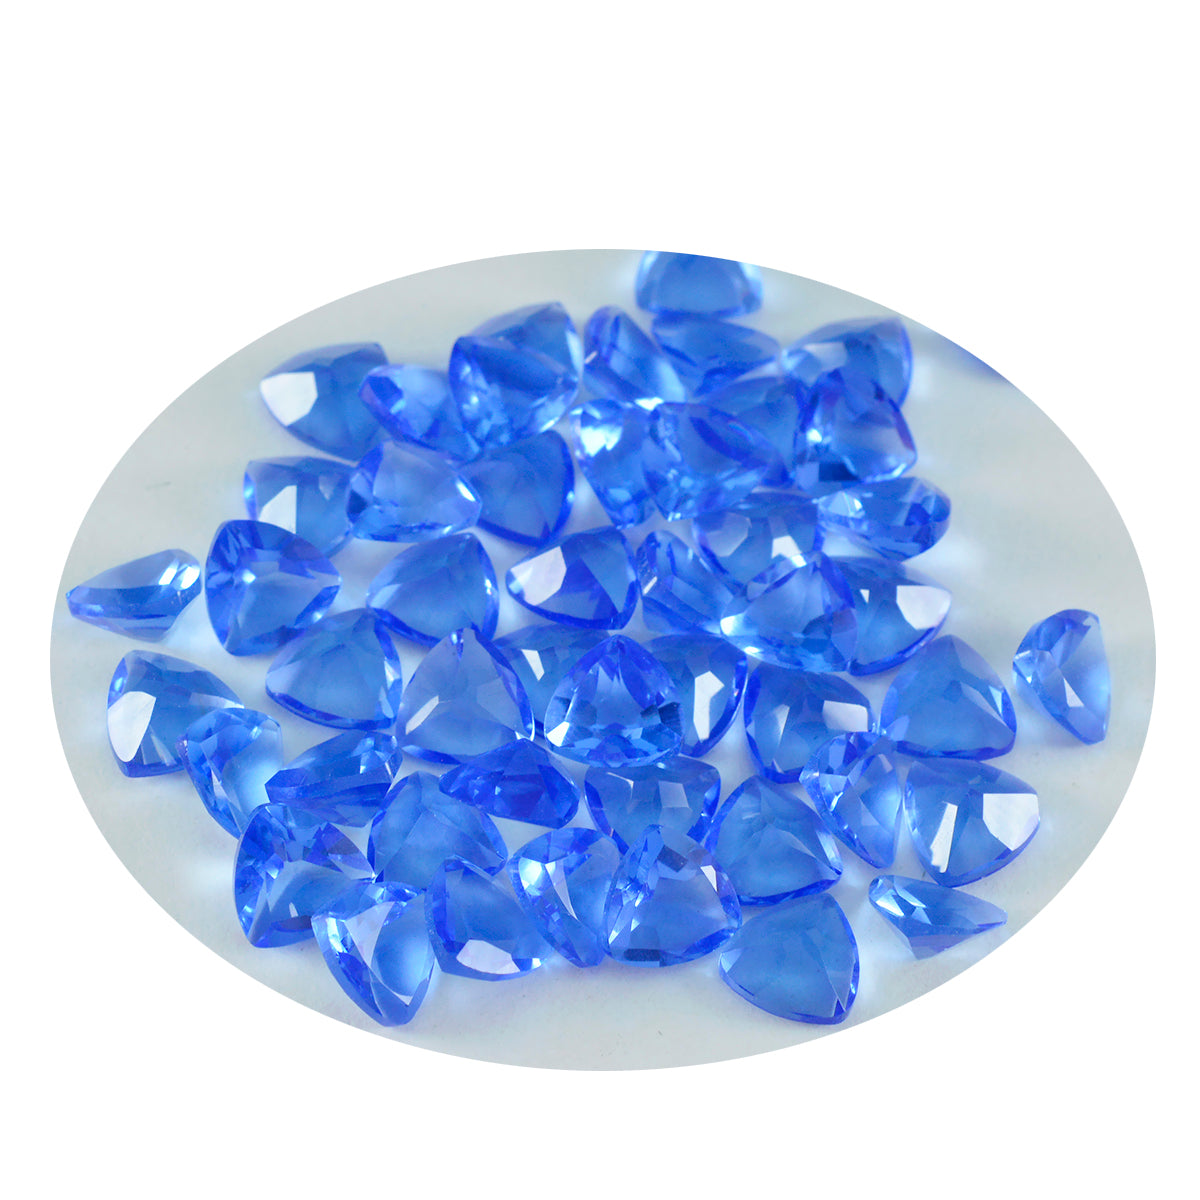 Riyogems 1PC Blue Sapphire CZ Faceted 8x8 mm Trillion Shape wonderful Quality Loose Gemstone